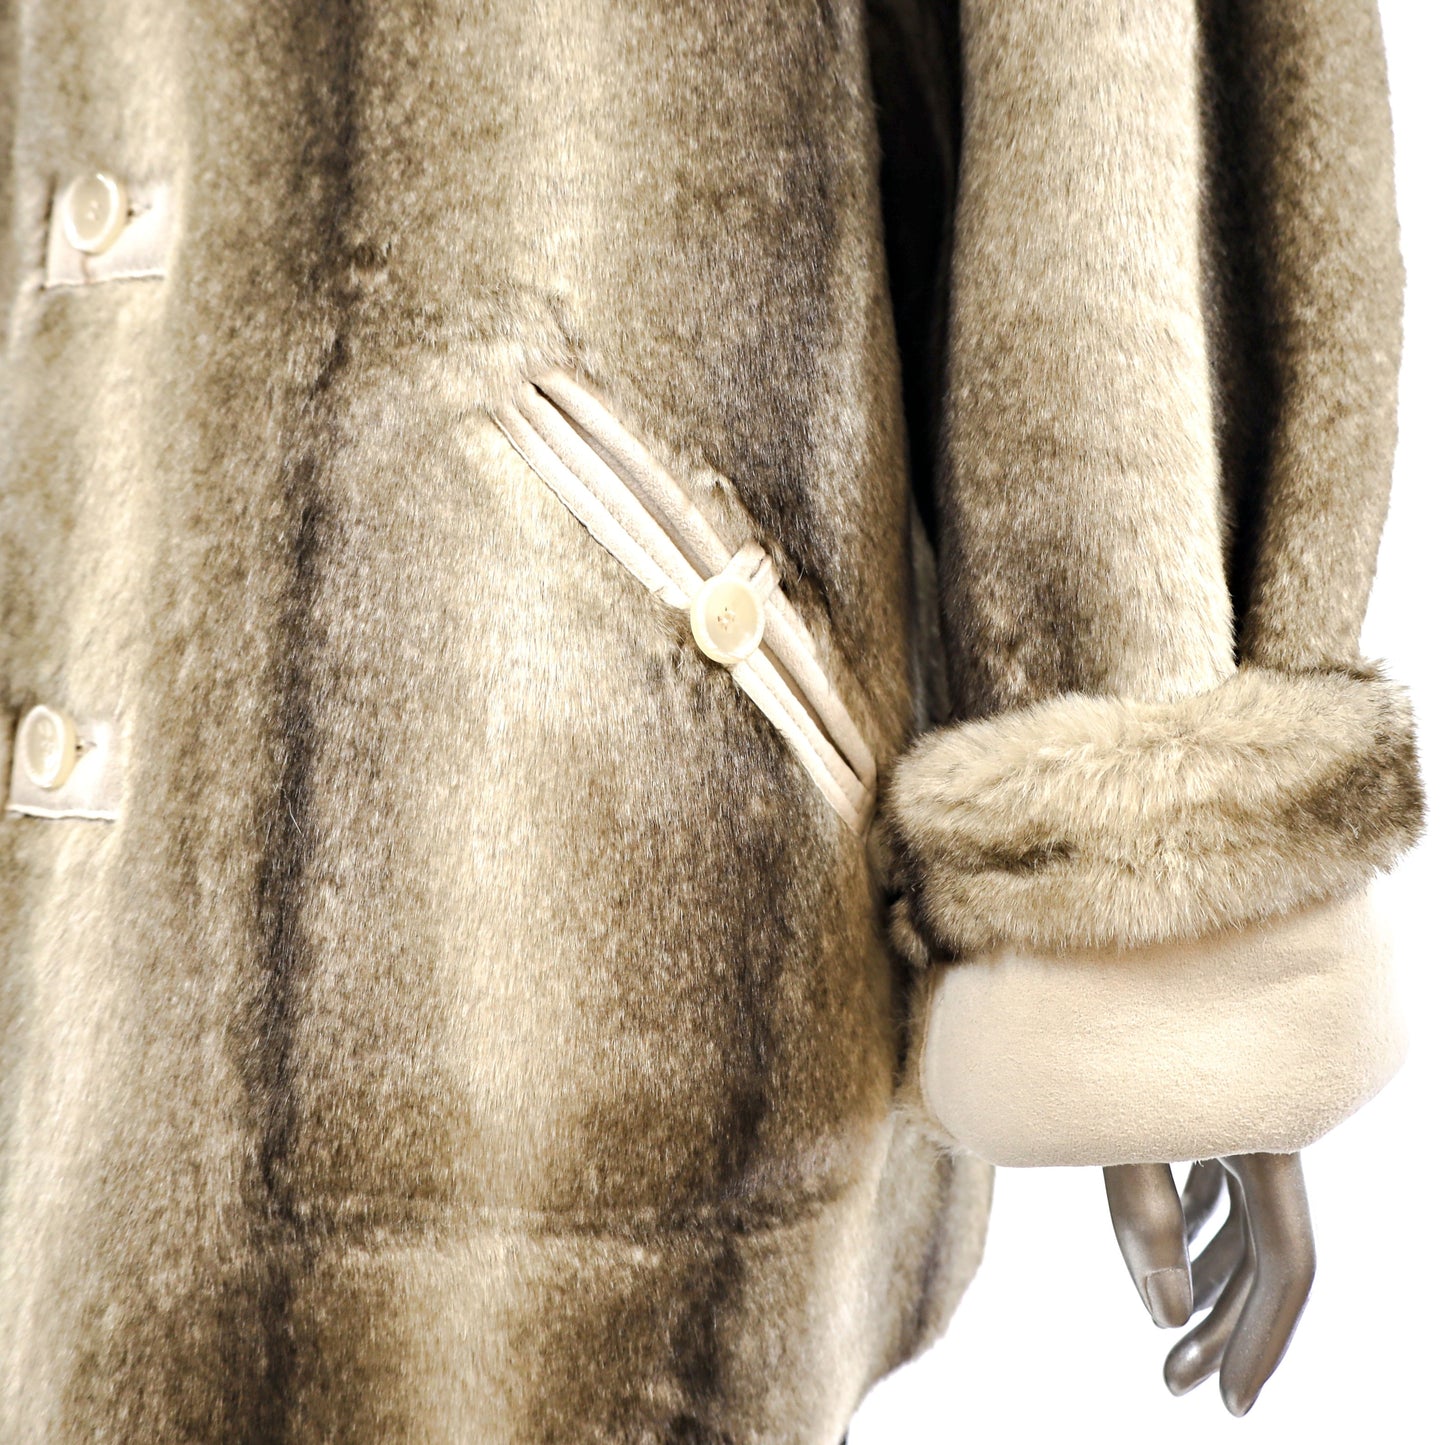 Dennis Basso Shearling Jacket Reversible to Faux Fur- Size L